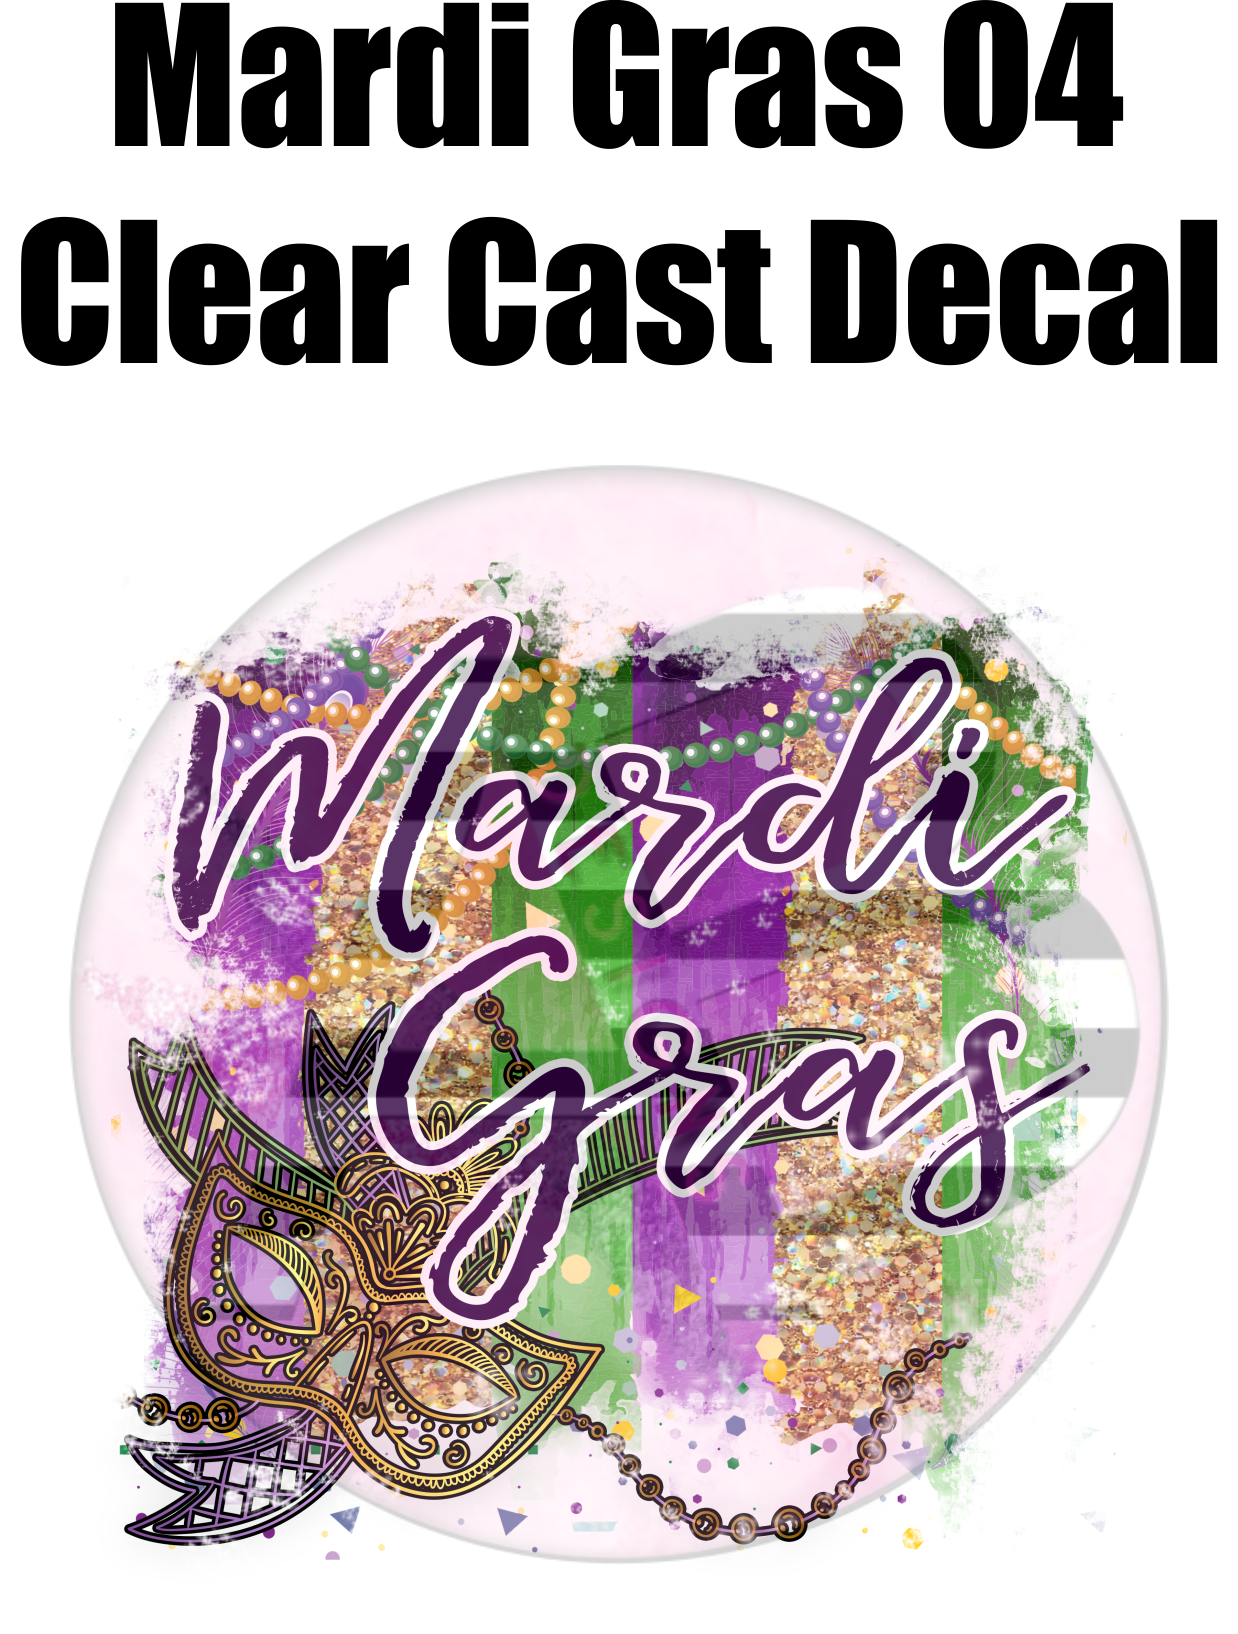 Mardi Gras 04 - Clear Cast Decal